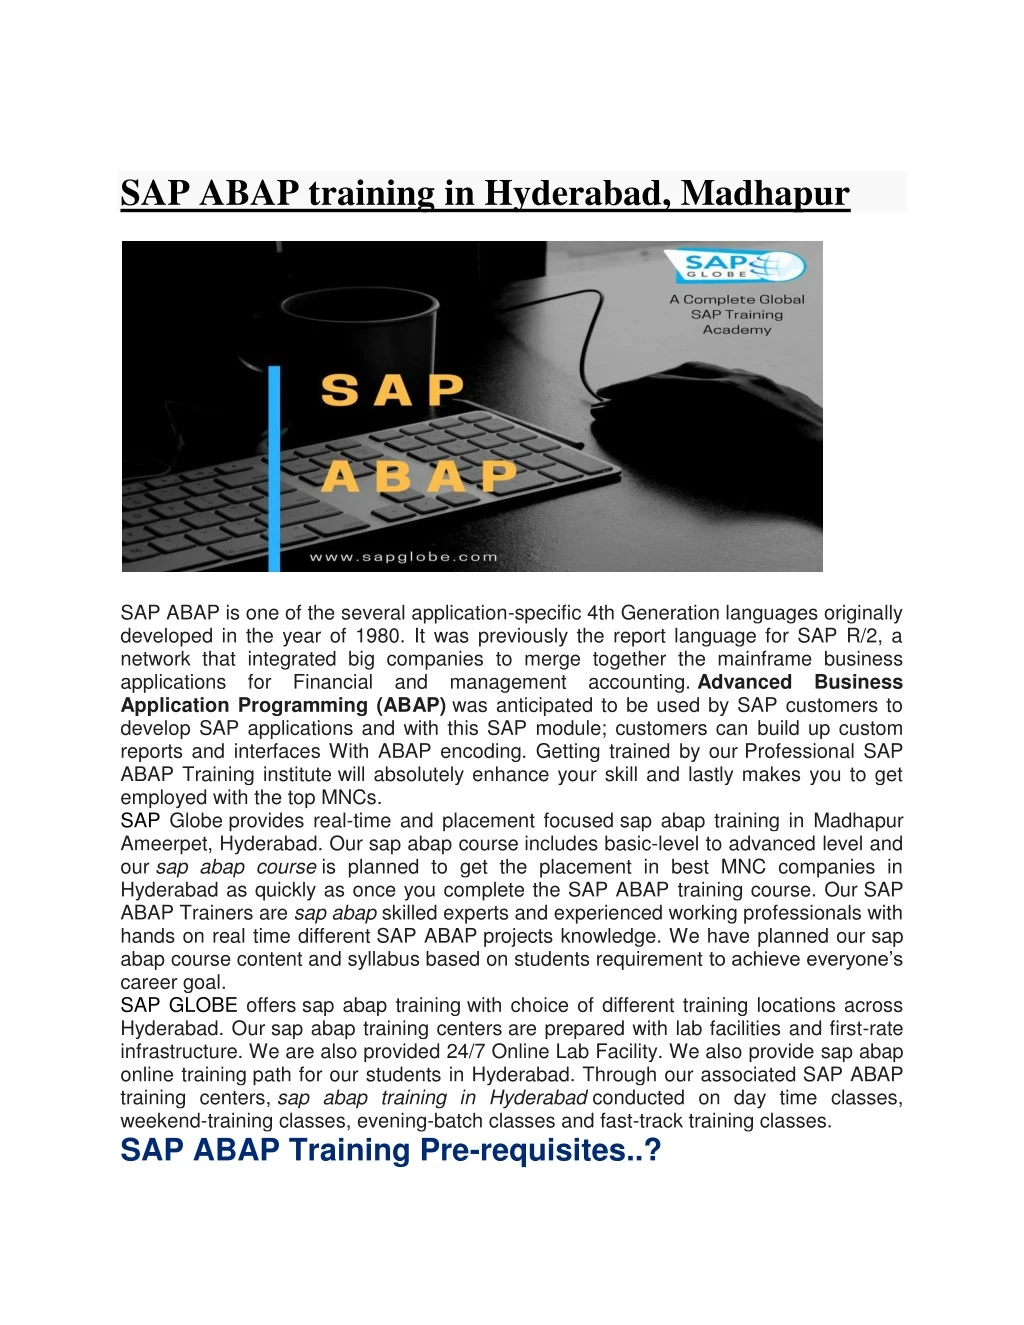 sap abap training in hyderabad madhapur